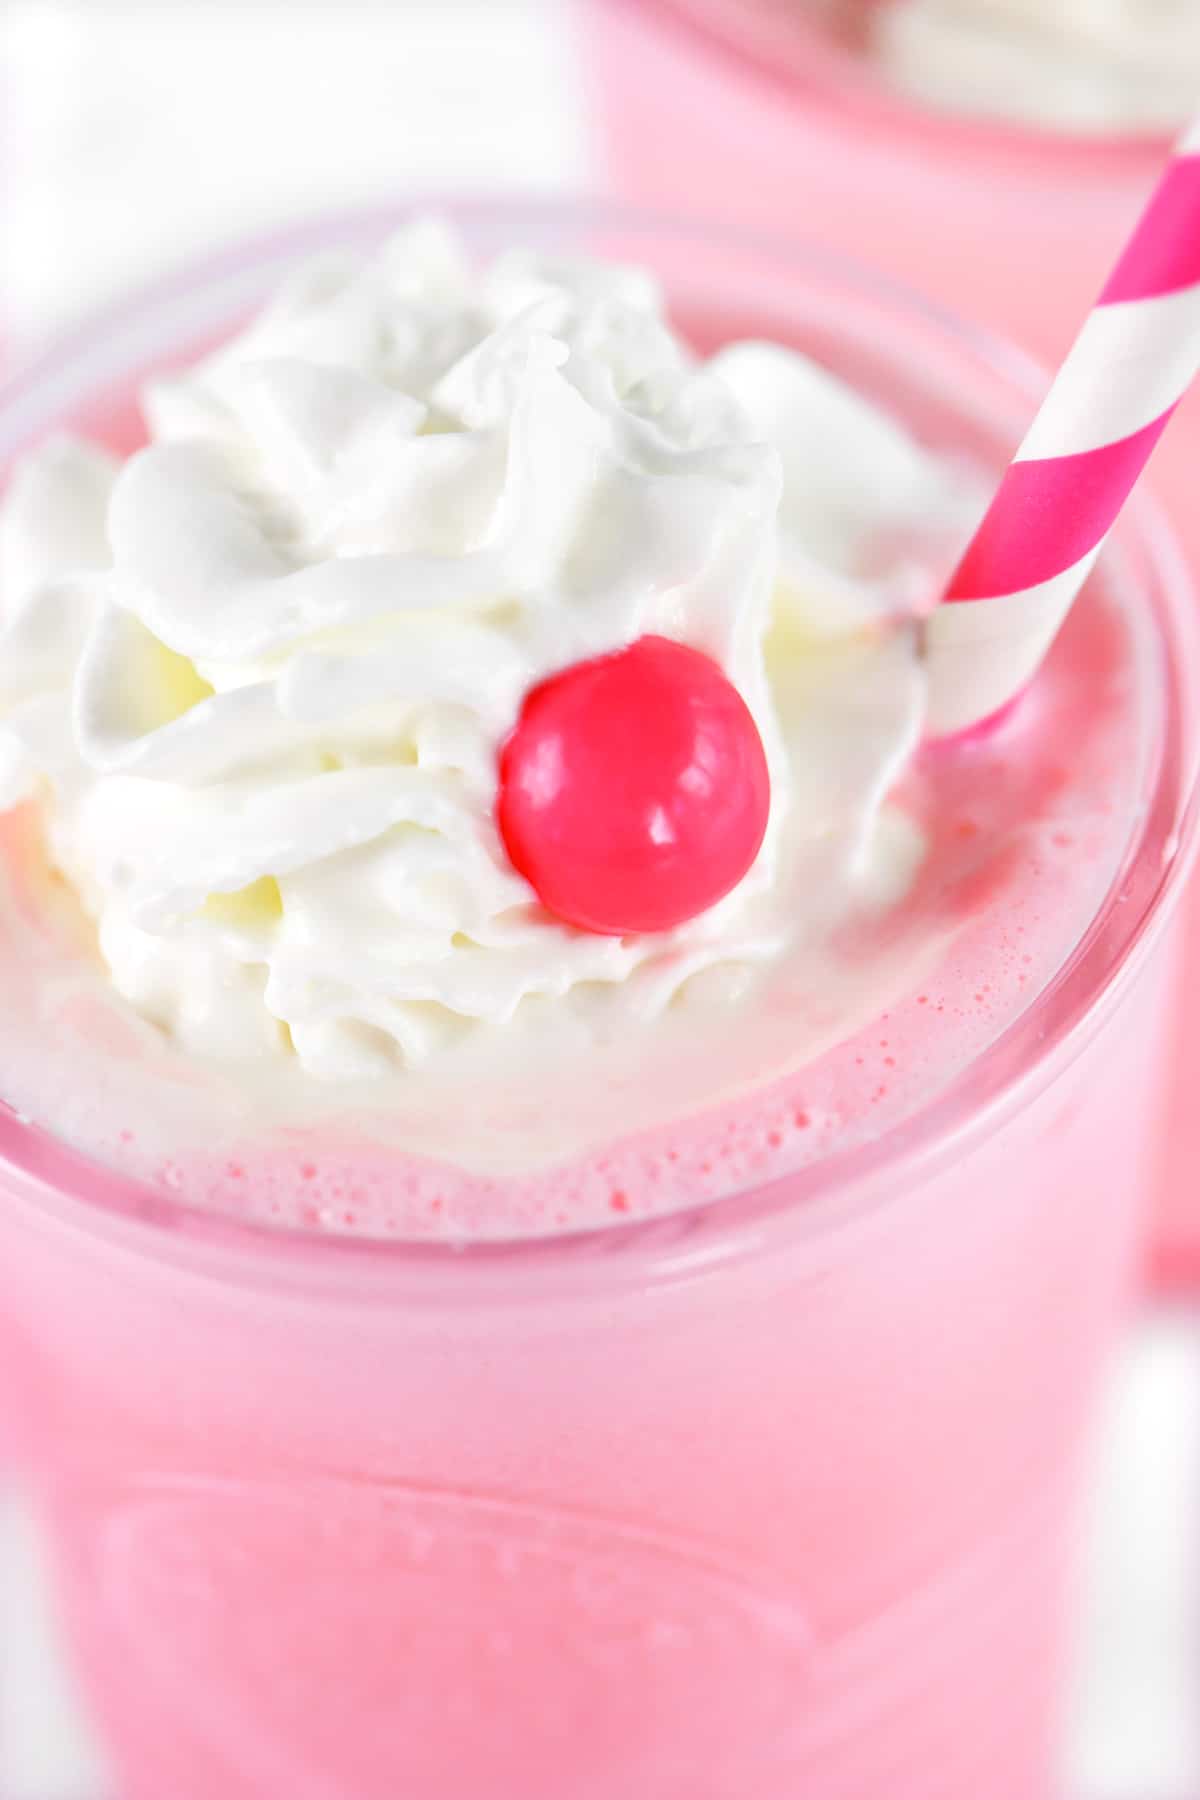 A pink gum ball on a bubblegum milkshake.